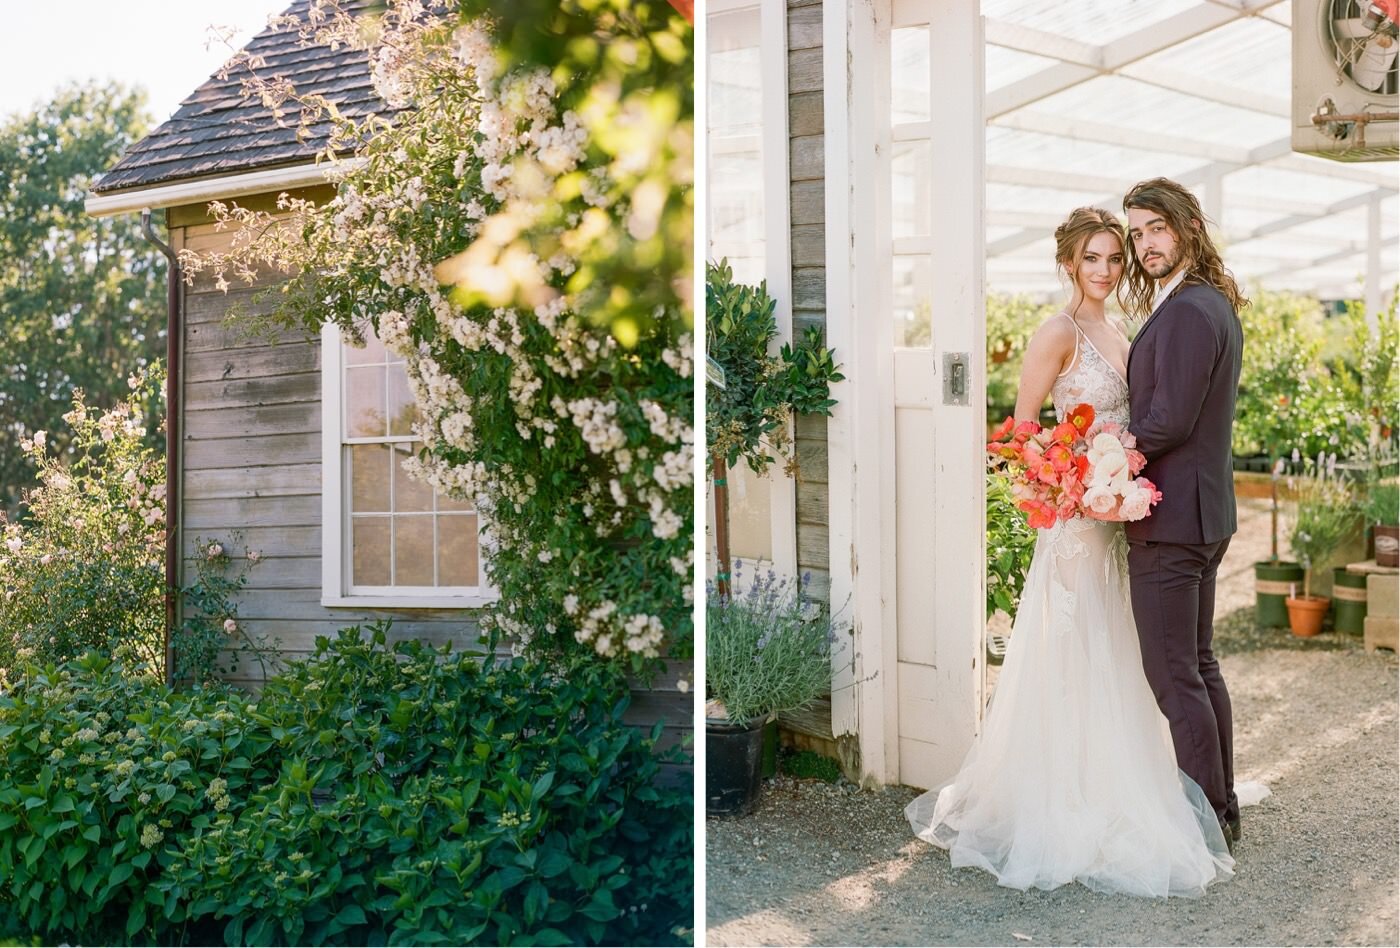 Sunny wedding portraits at a colorful greenhouse wedding near Seattle, WA